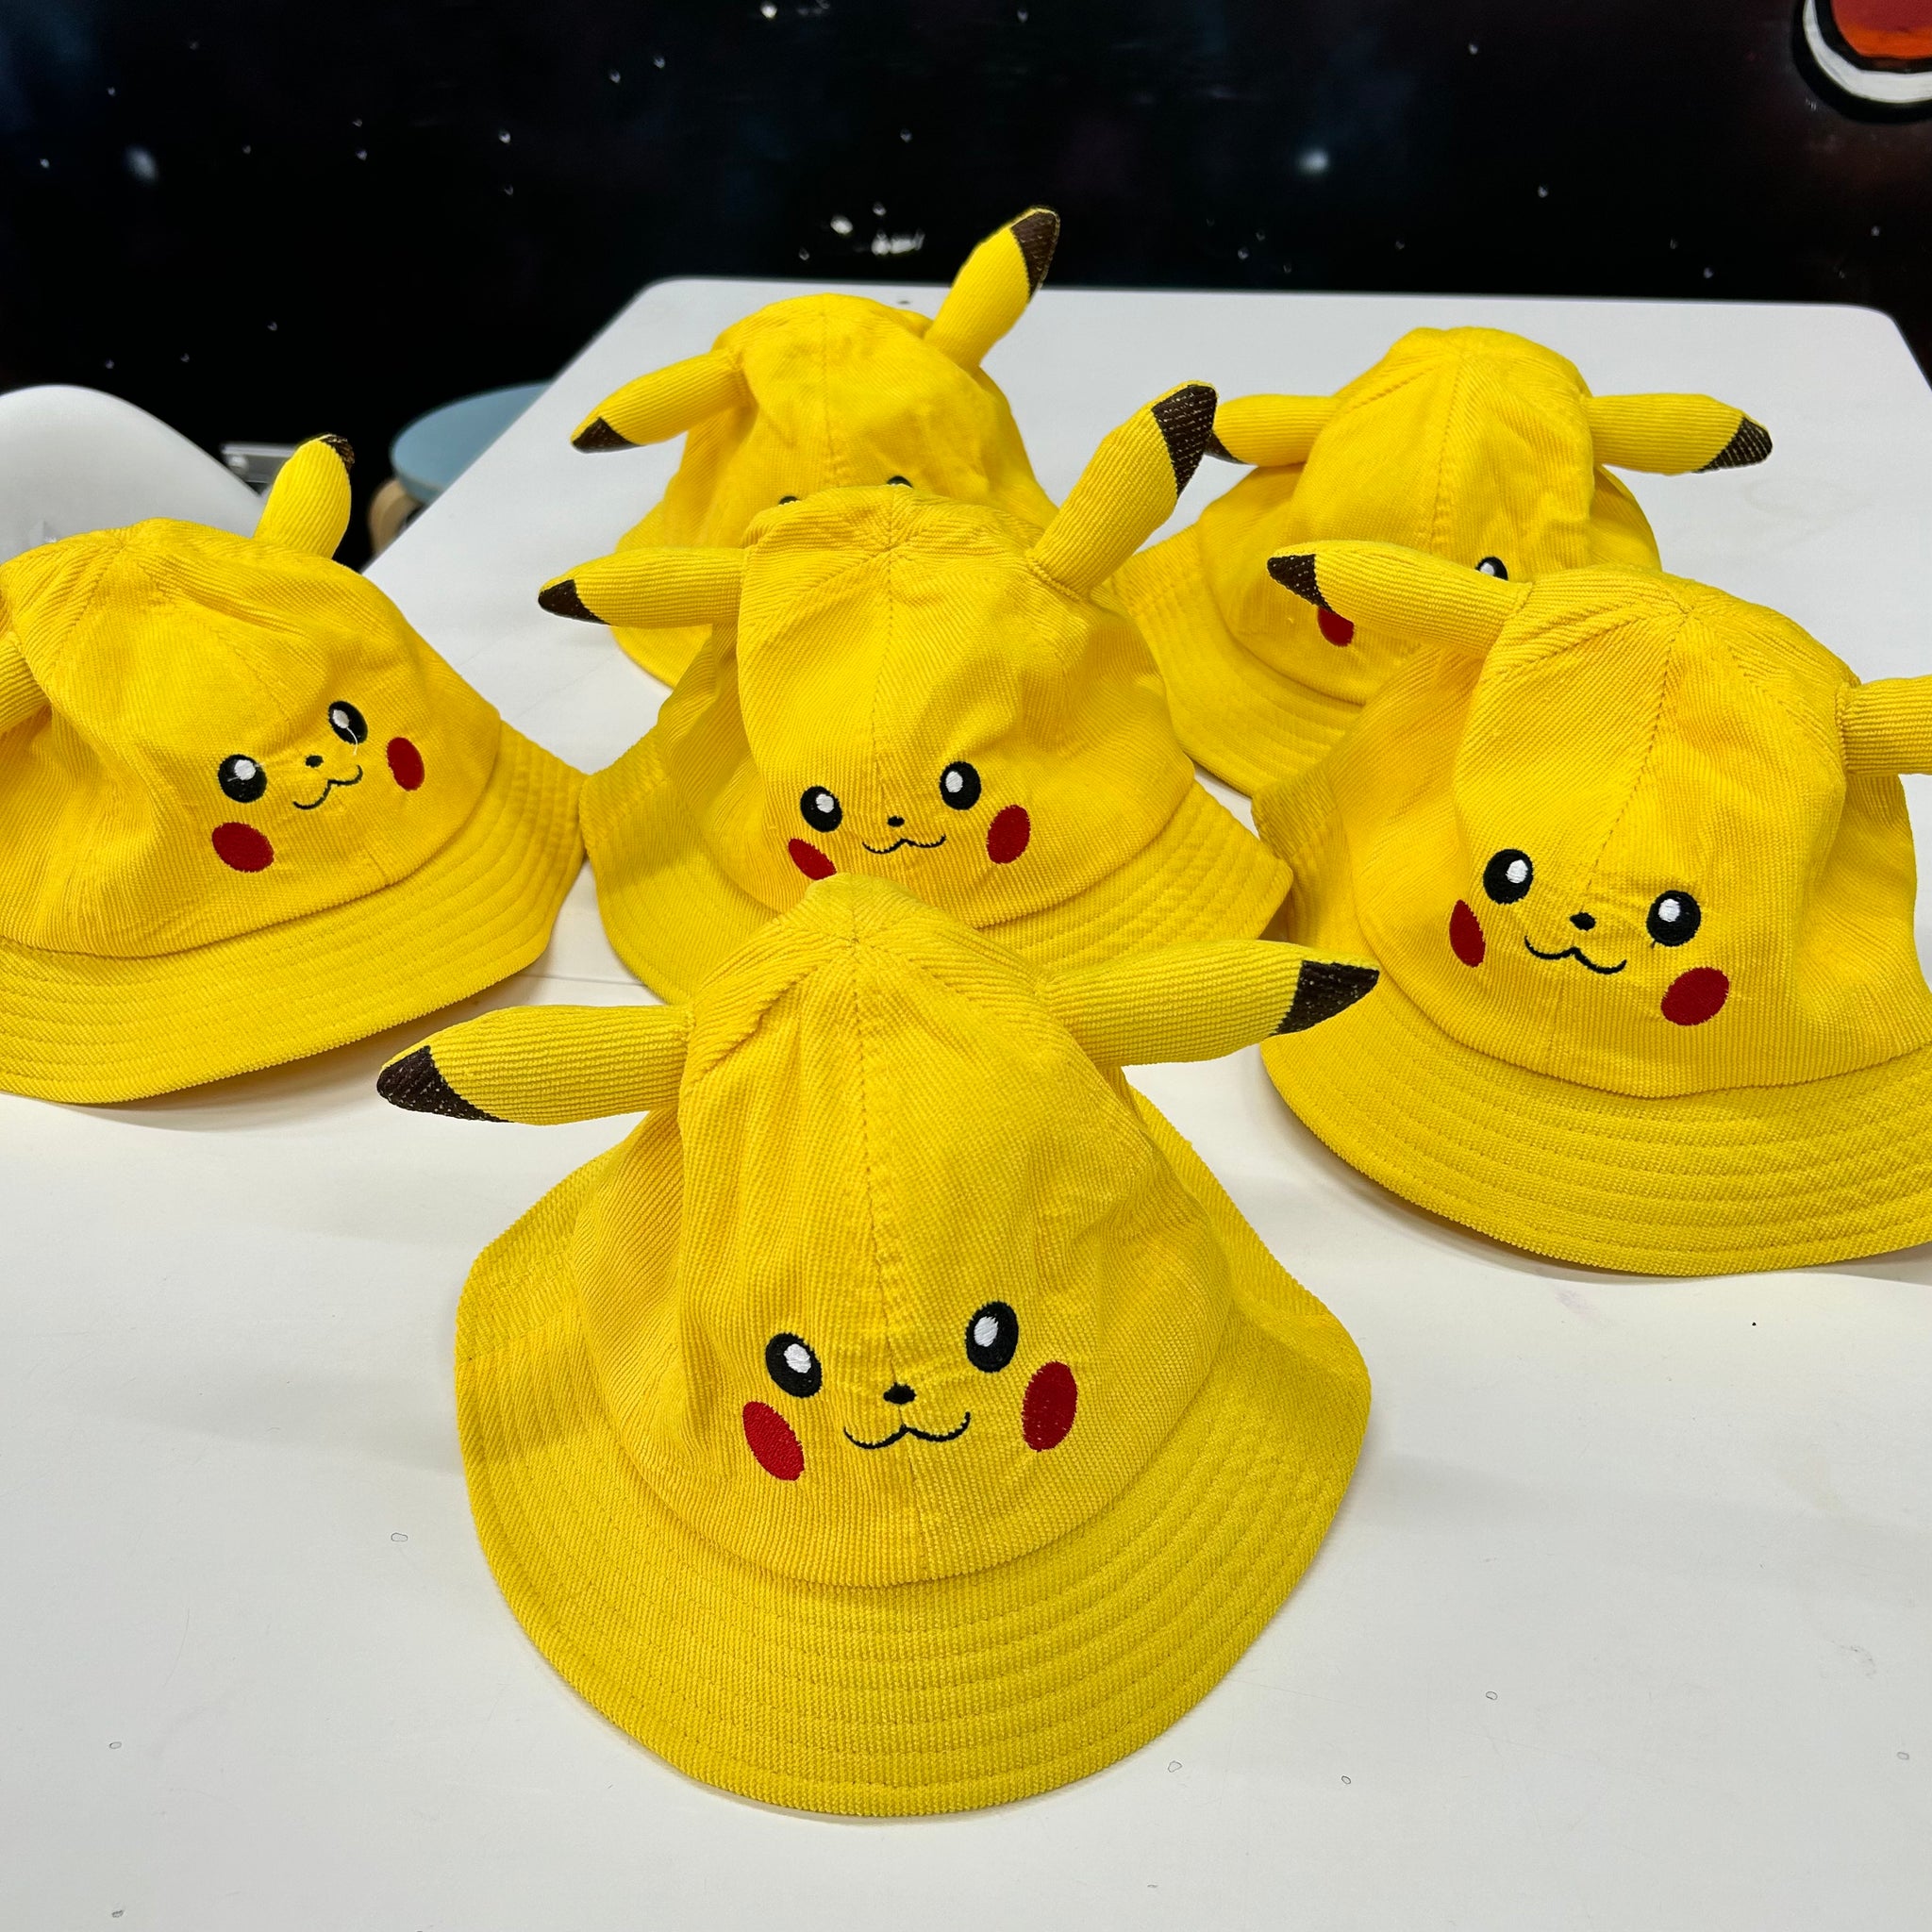 Pokemon Pikachu Sunhat with ears!